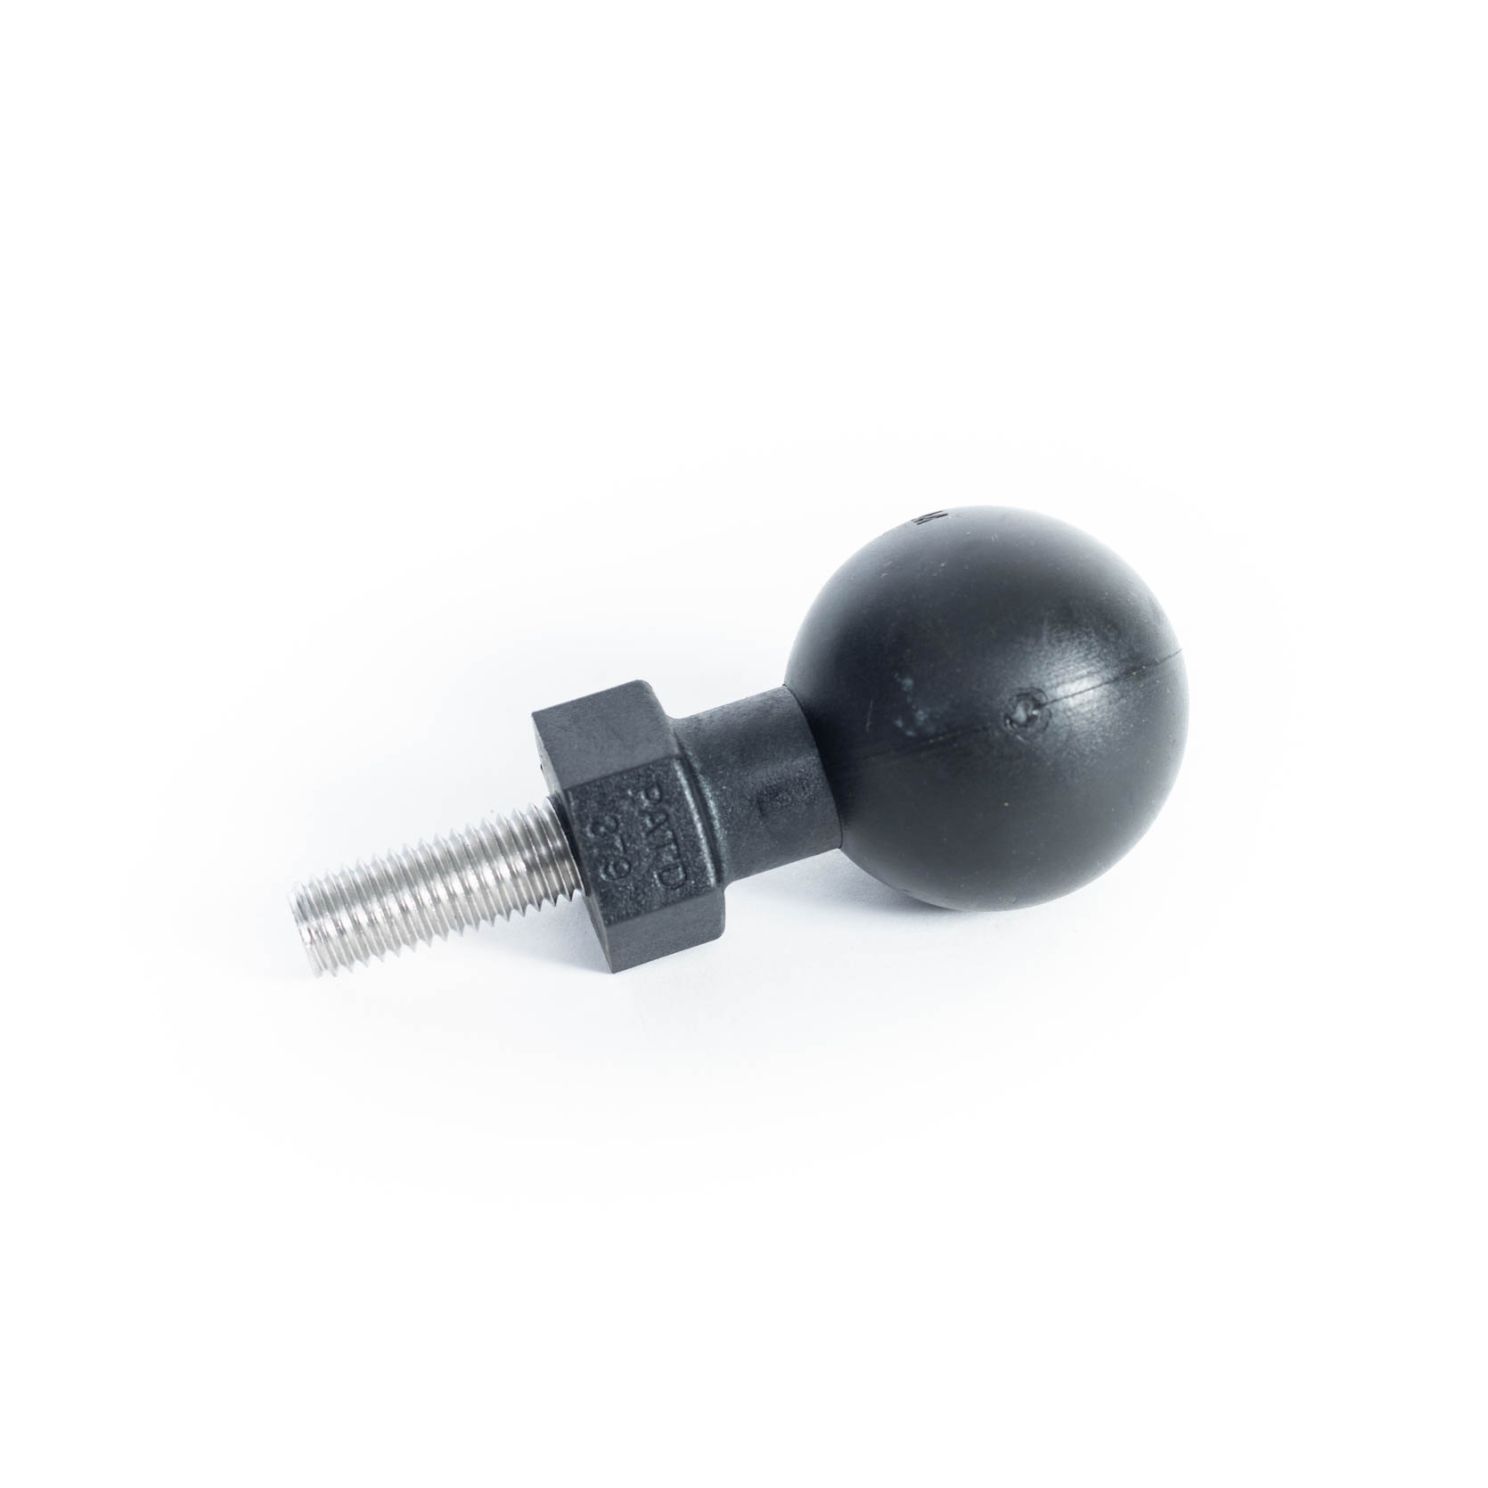 Ram 1.5" C Ball Tough Ball with Threaded Insert RAP-379U-M101525